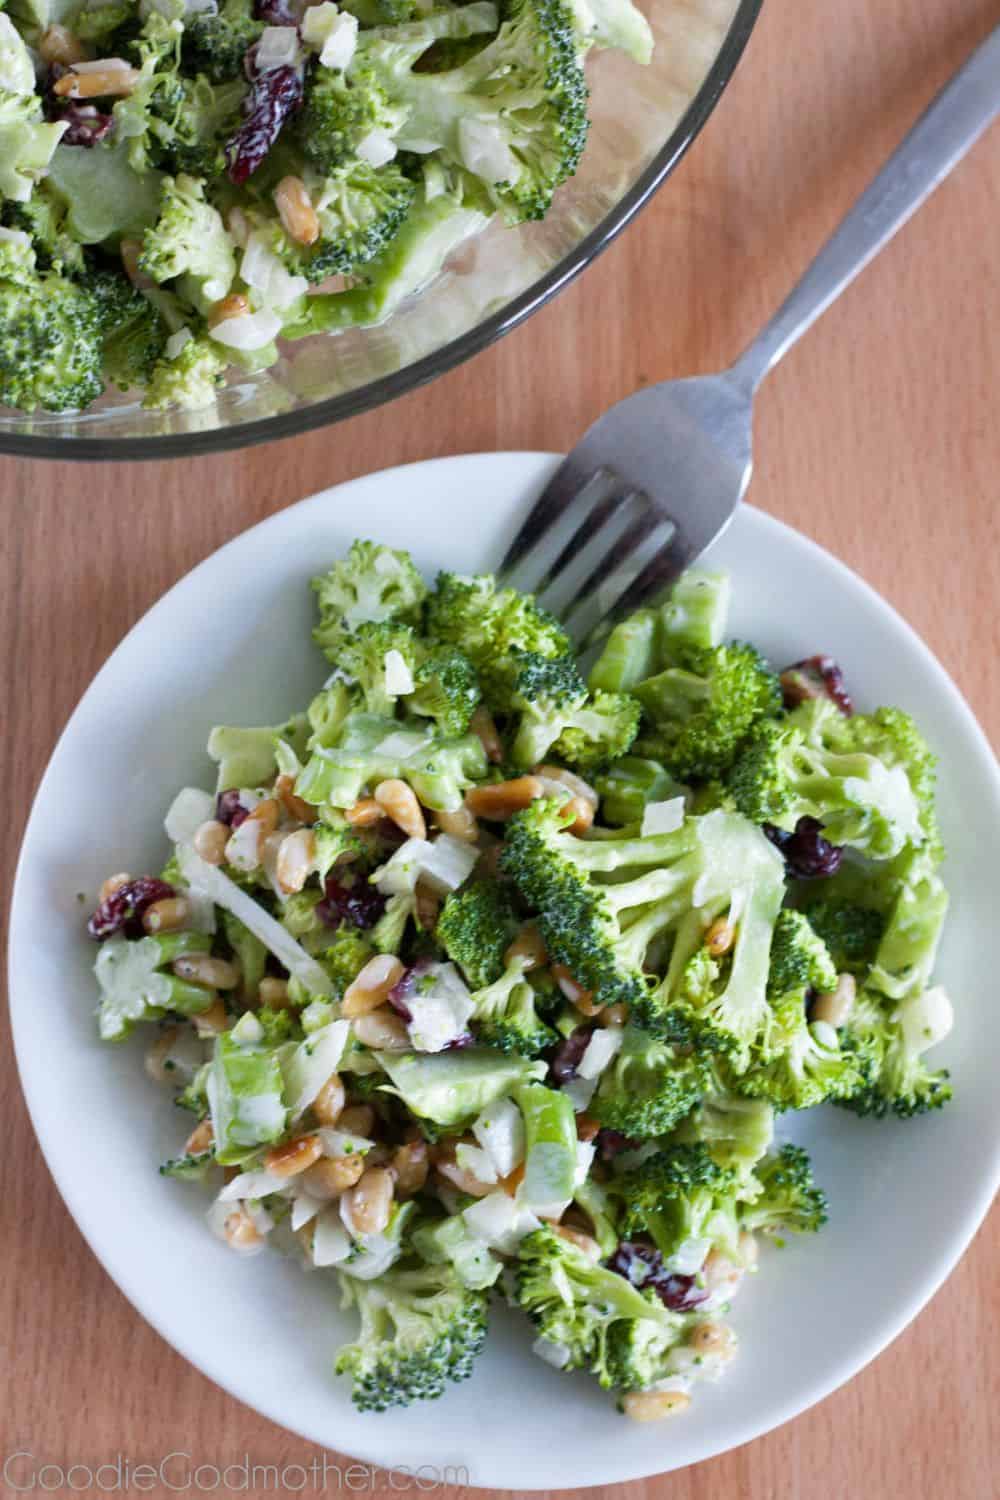 My Favorite Broccoli Salad Recipe - Goodie Godmother